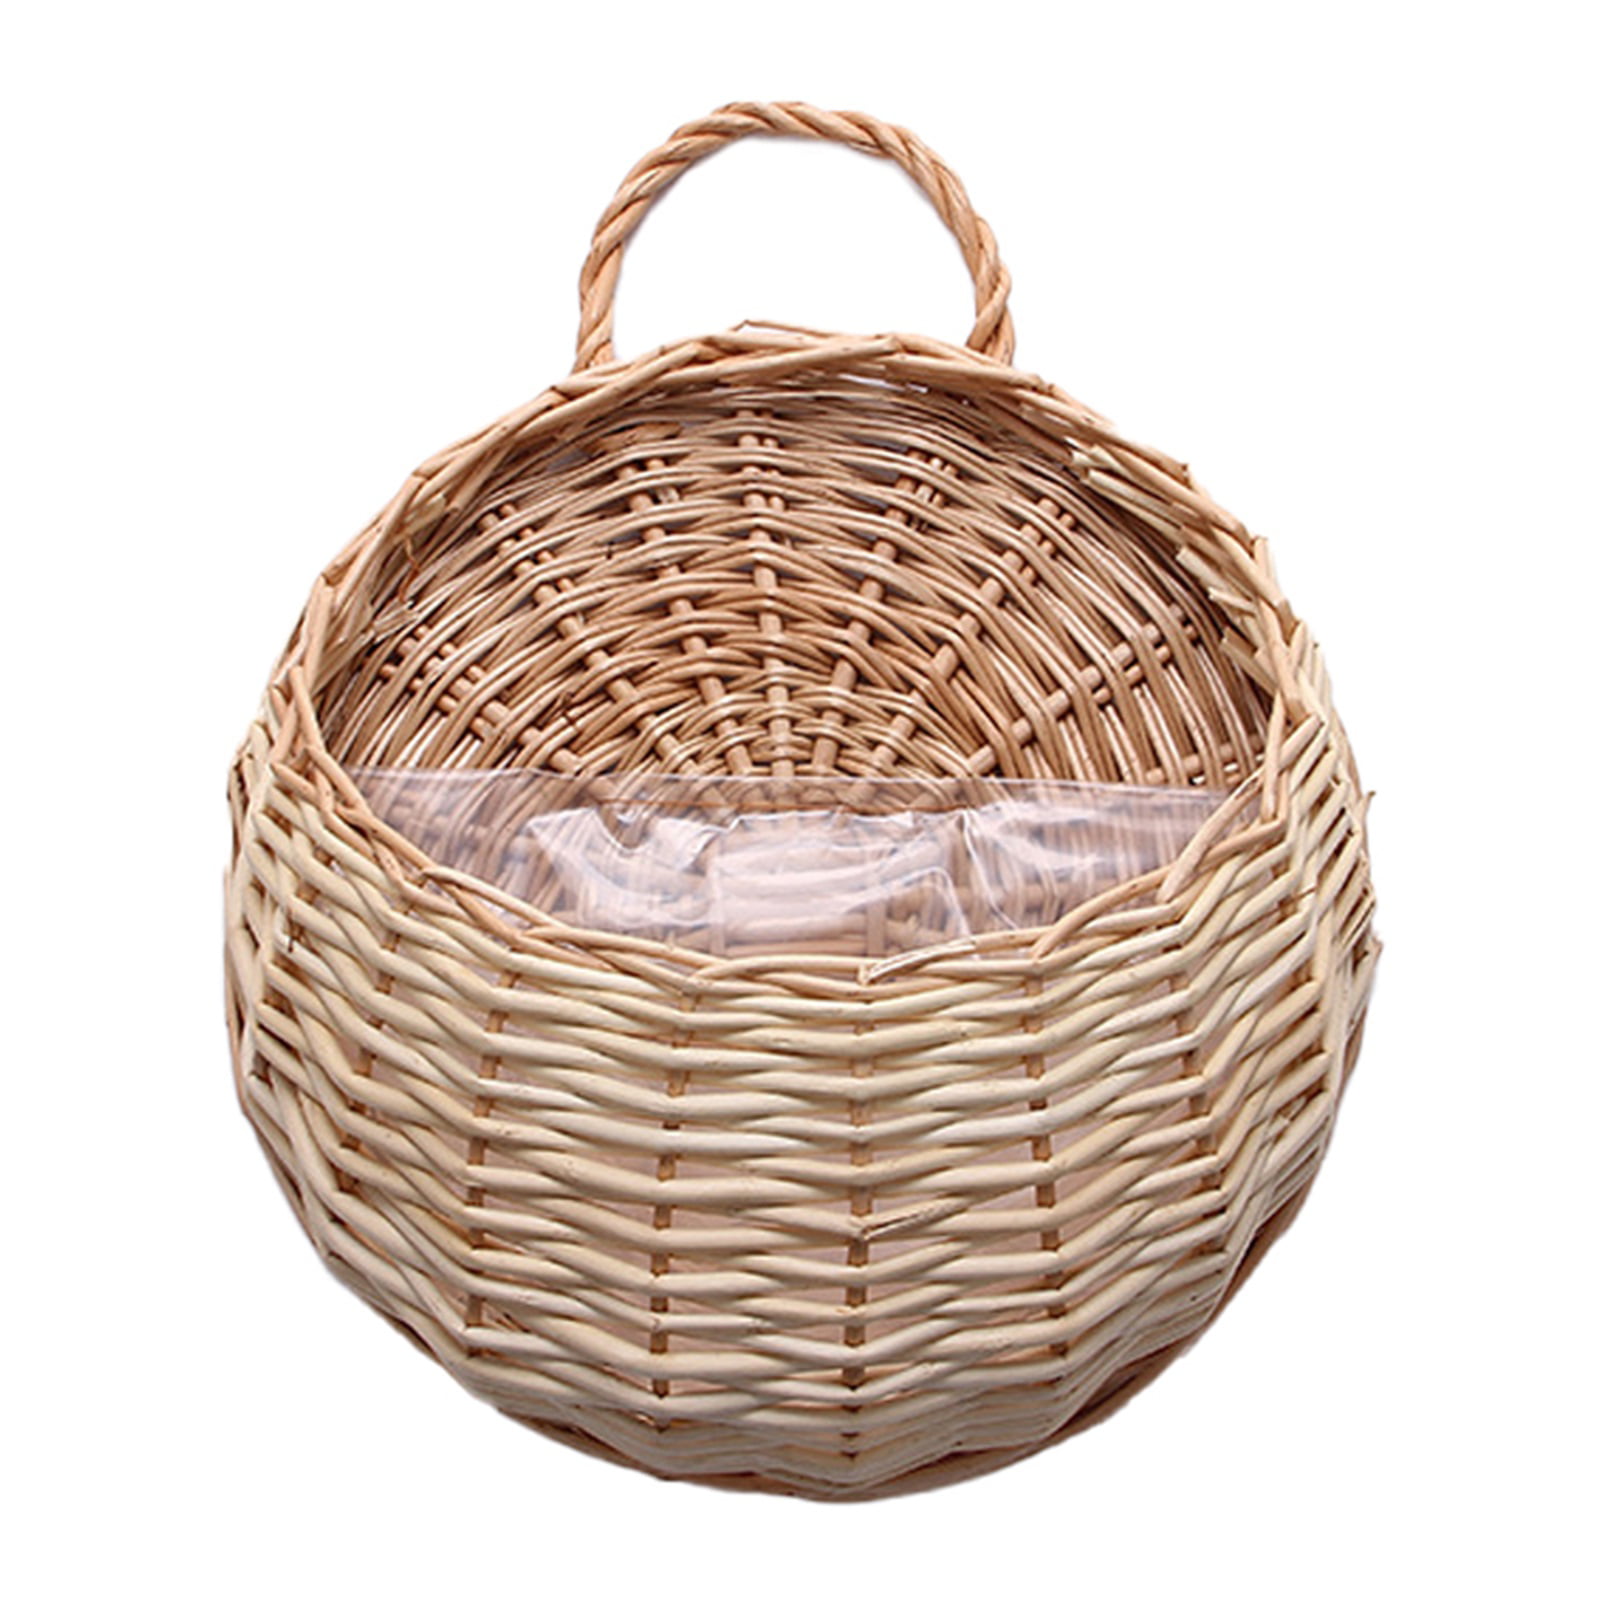 Basket Weaving around a wooden Base and Flower Sticks